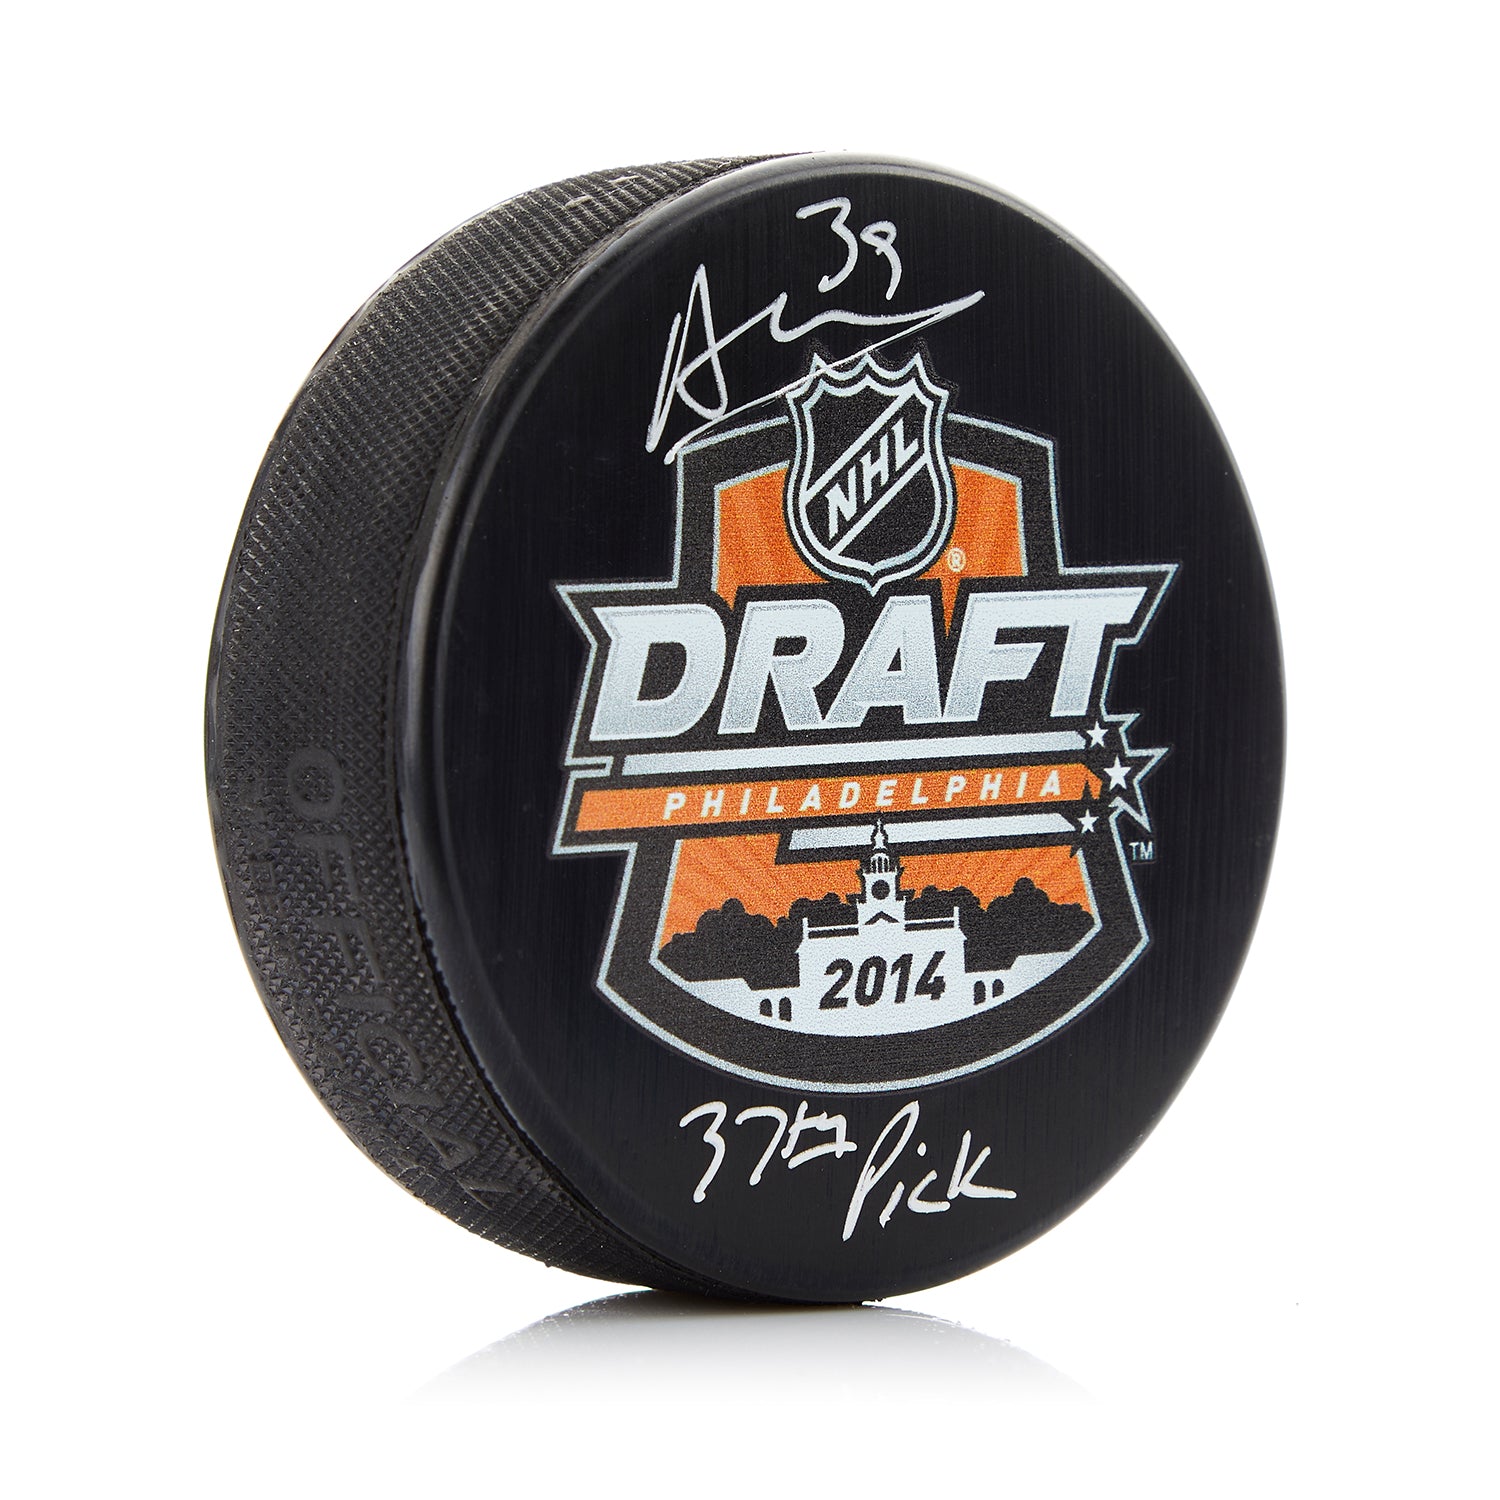 Alex Nedeljkovic Signed 2014 NHL Draft 37th Pick Puck